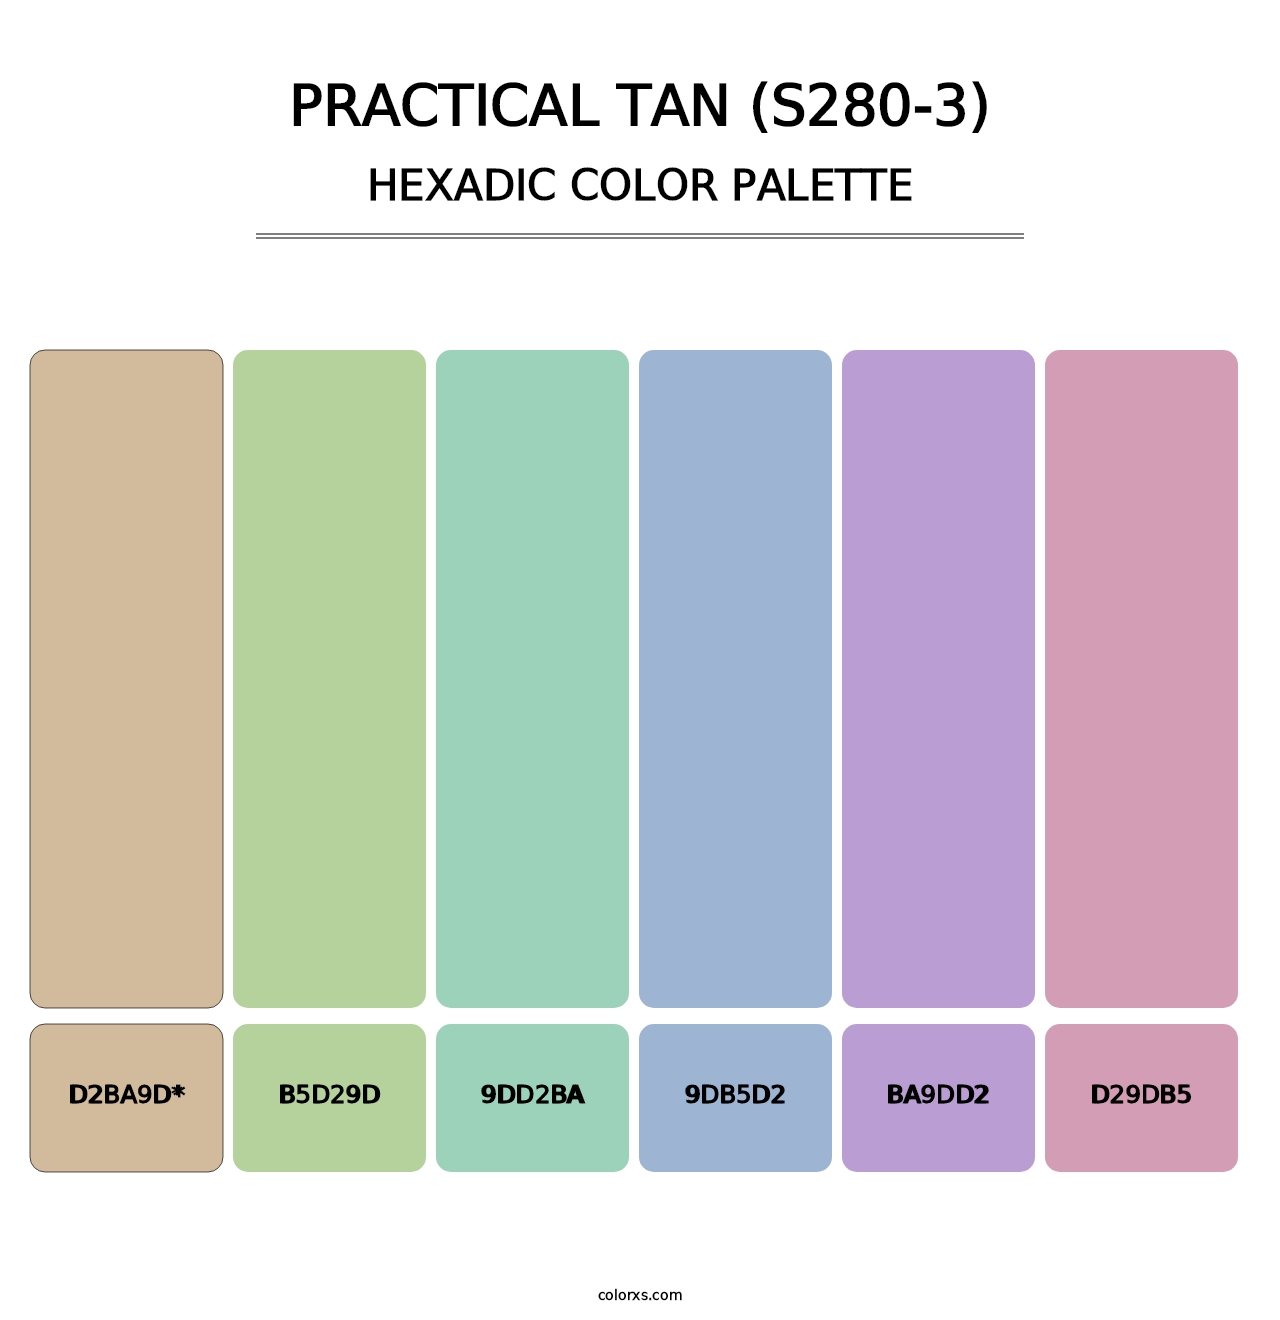 Practical Tan (S280-3) - Hexadic Color Palette